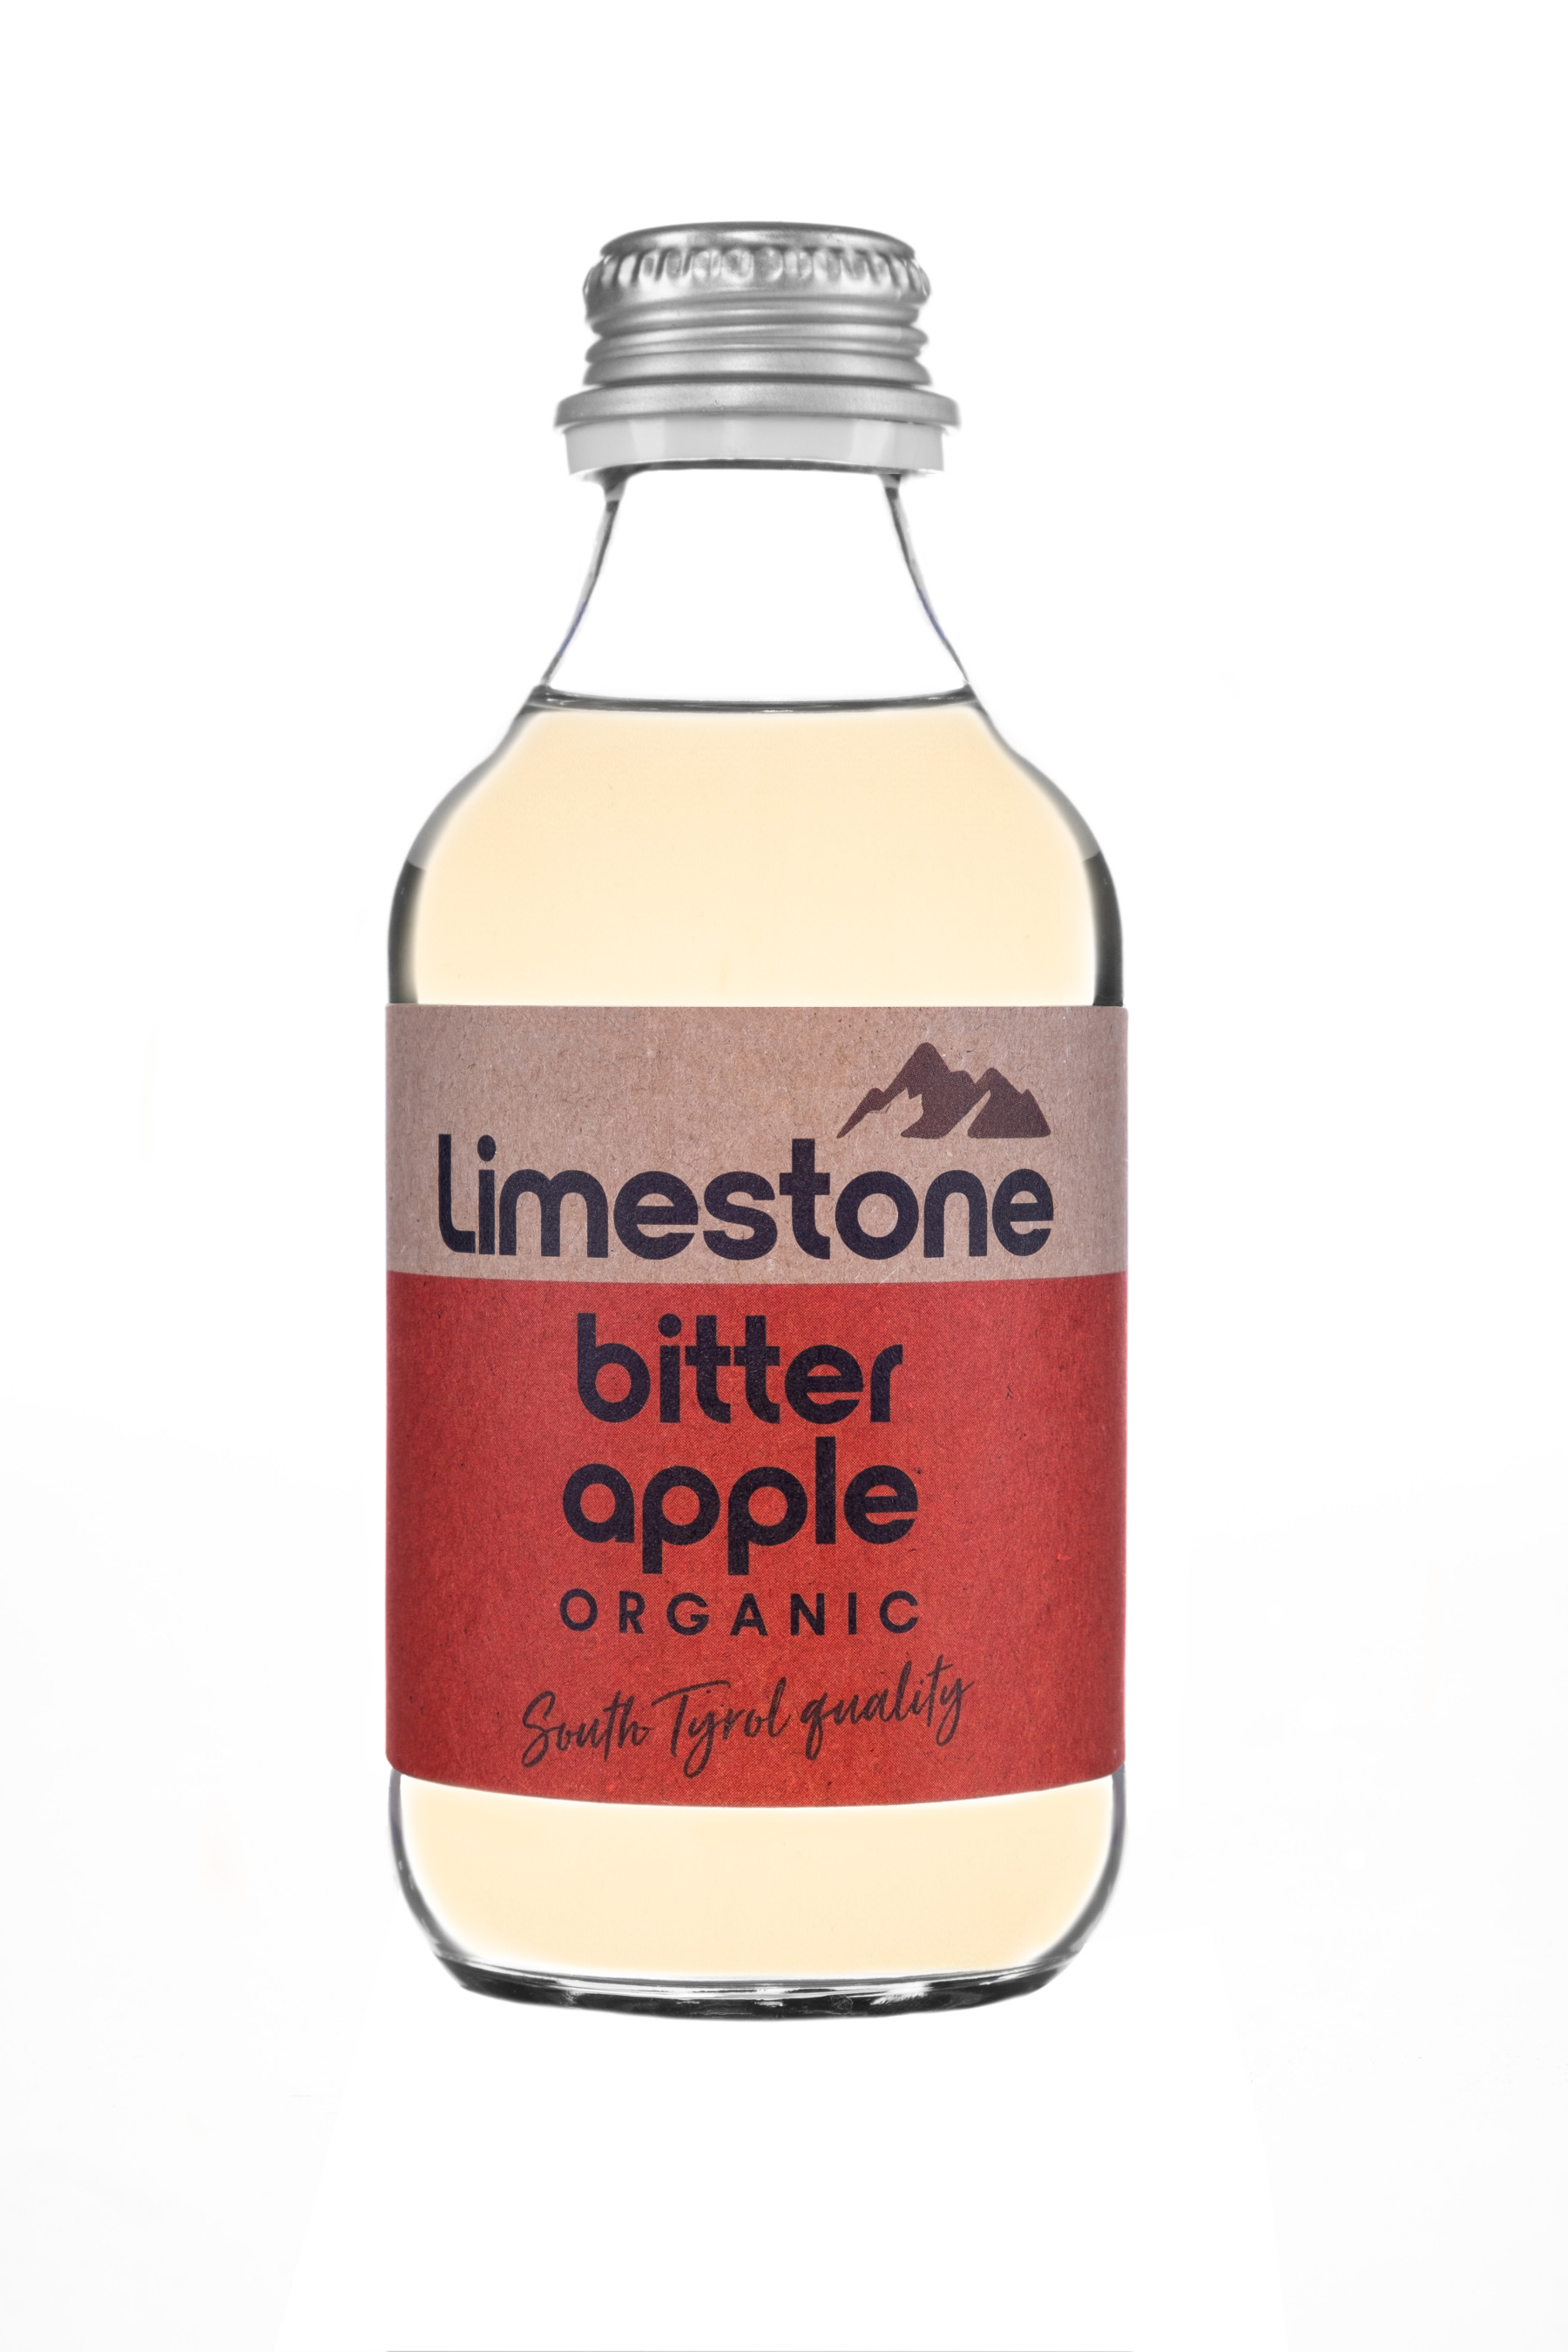 Limestone bitter apple   Organic alkoholfrei 